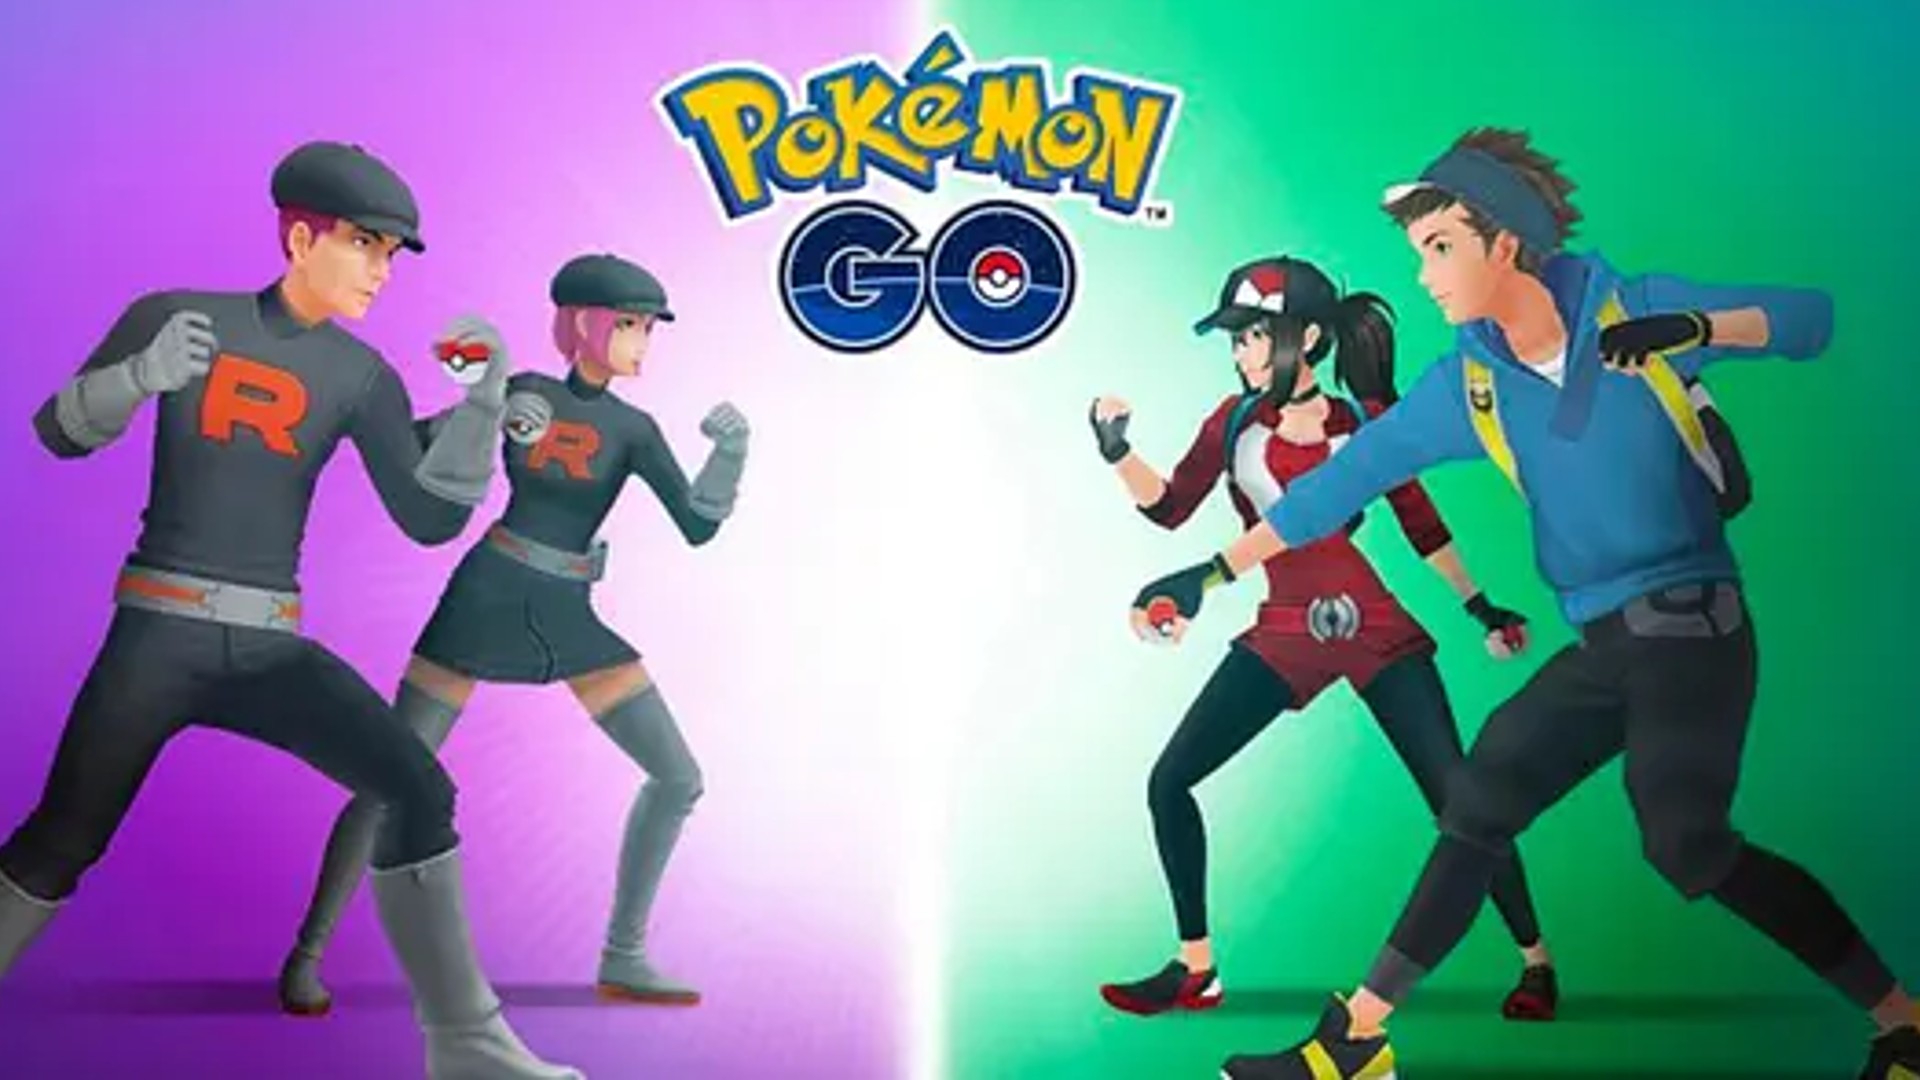 Pokémon GO - Trainers, your next adventure starts NOW! Complete